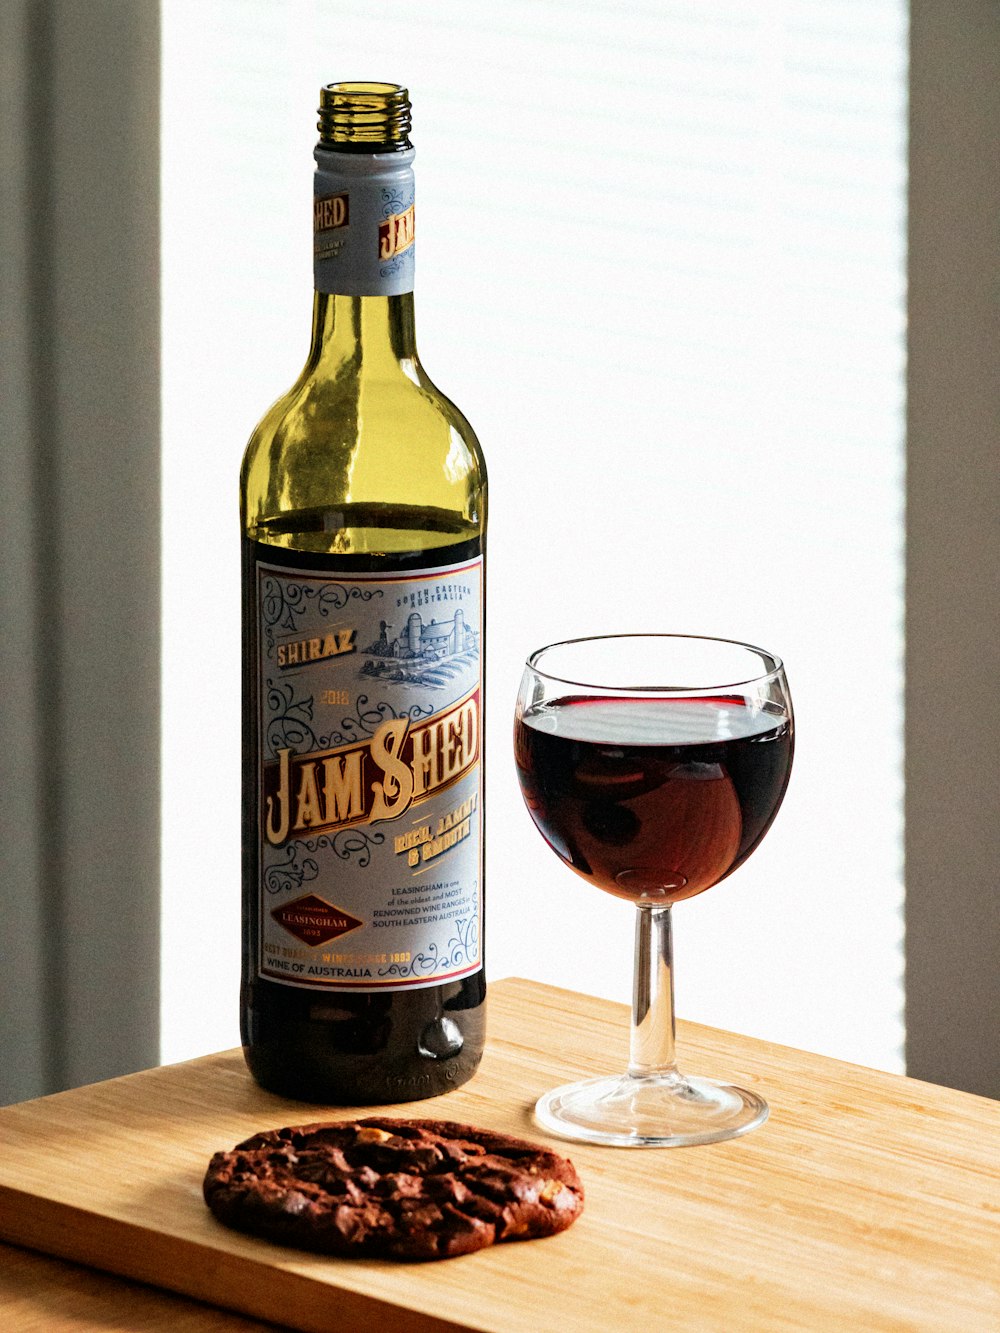 Jam Shed wine bottle beside wine filled wineglass on wooden surface